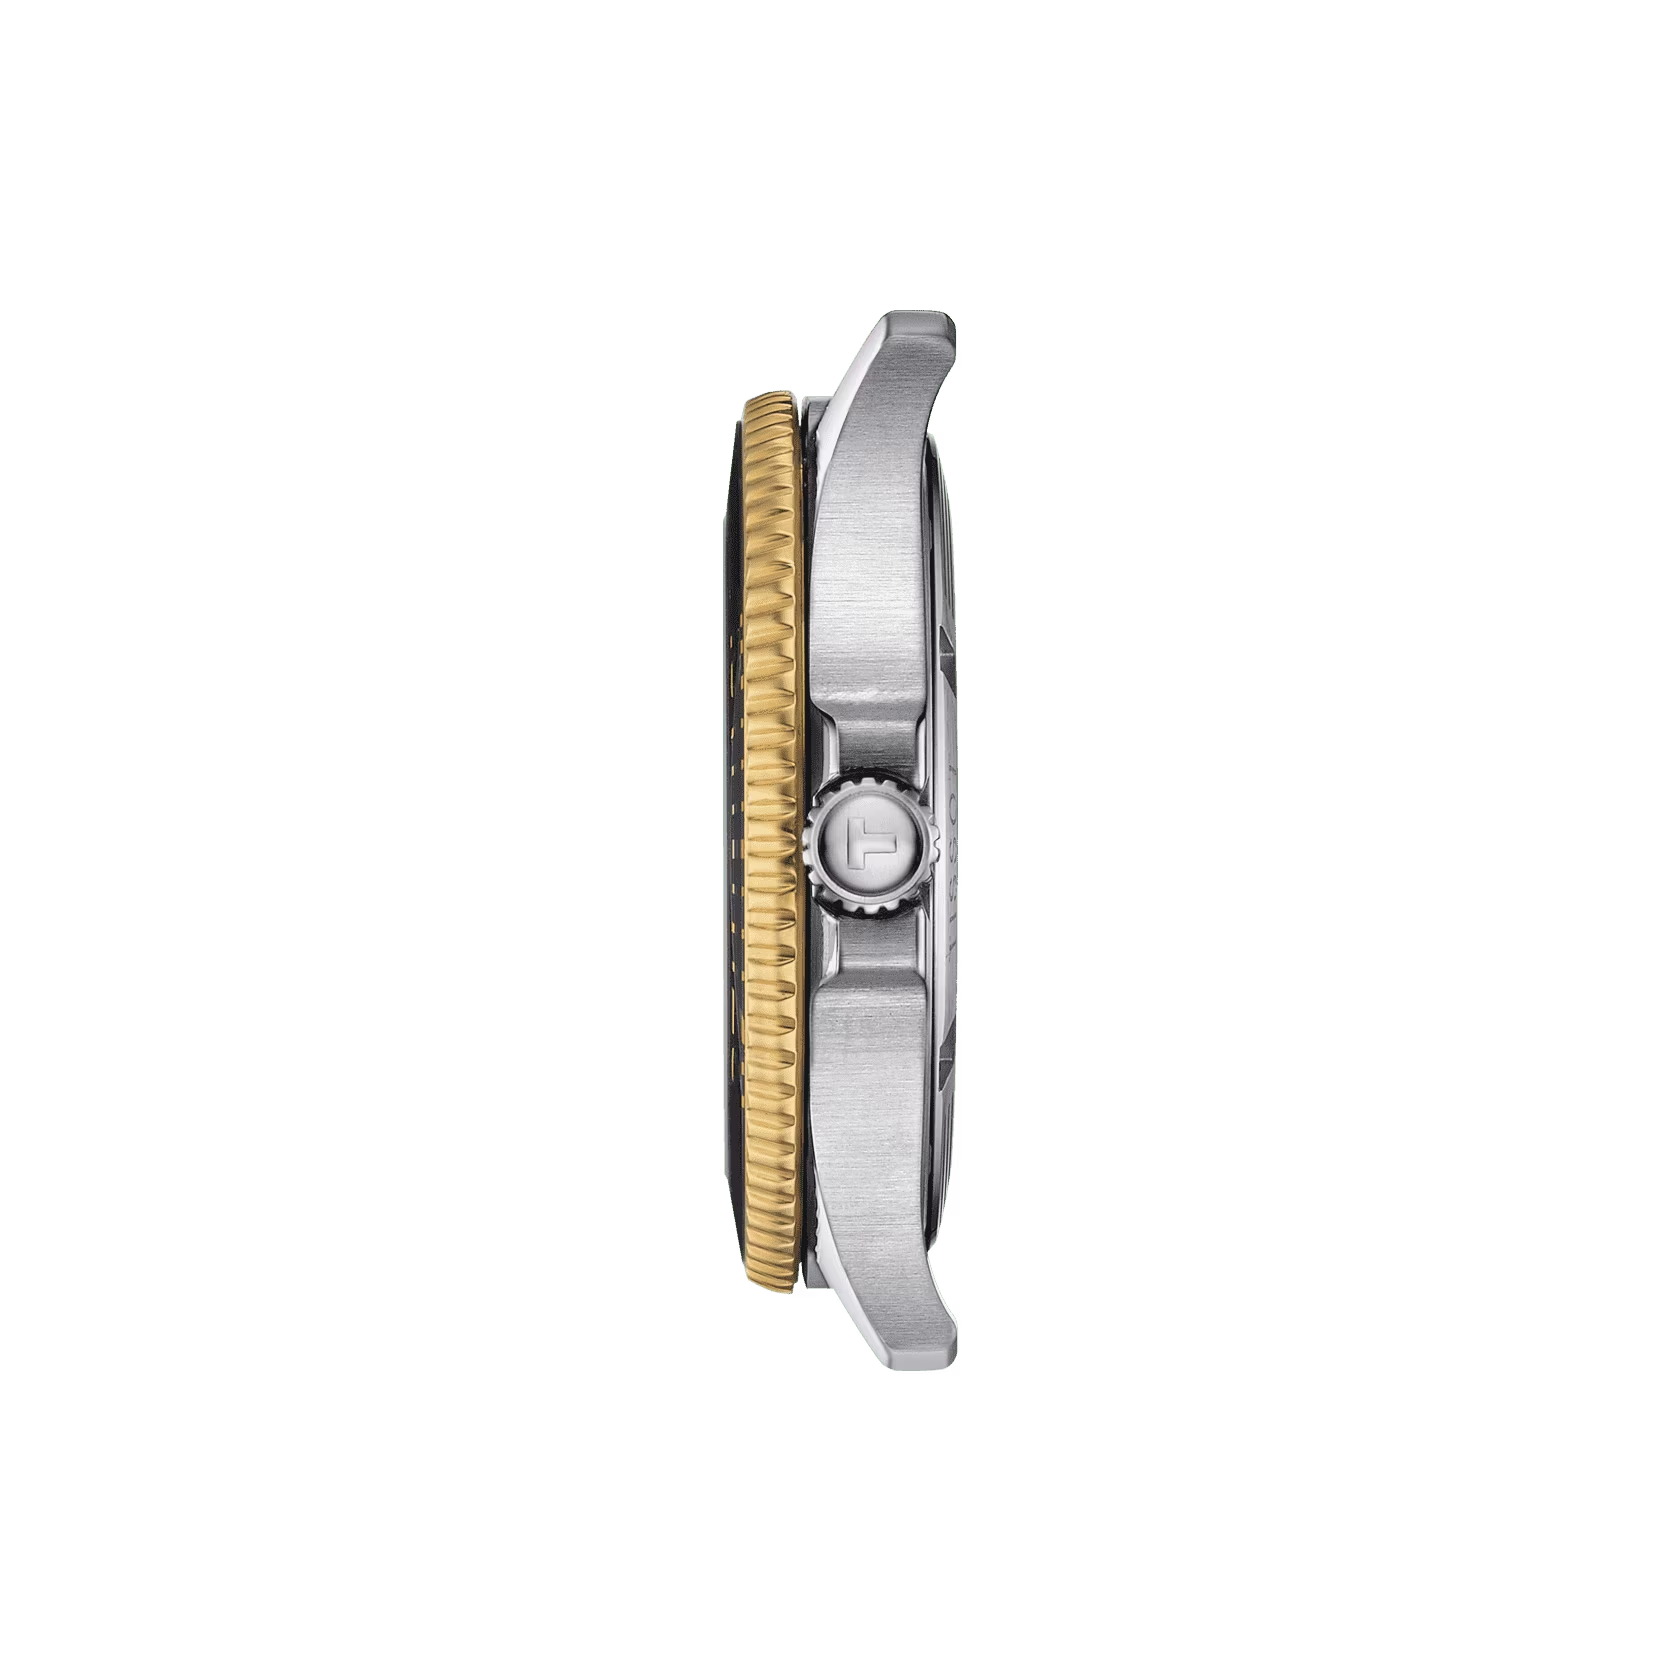 Seastar 1000 40mm Steel and Gold Quartz Bracelet Watch